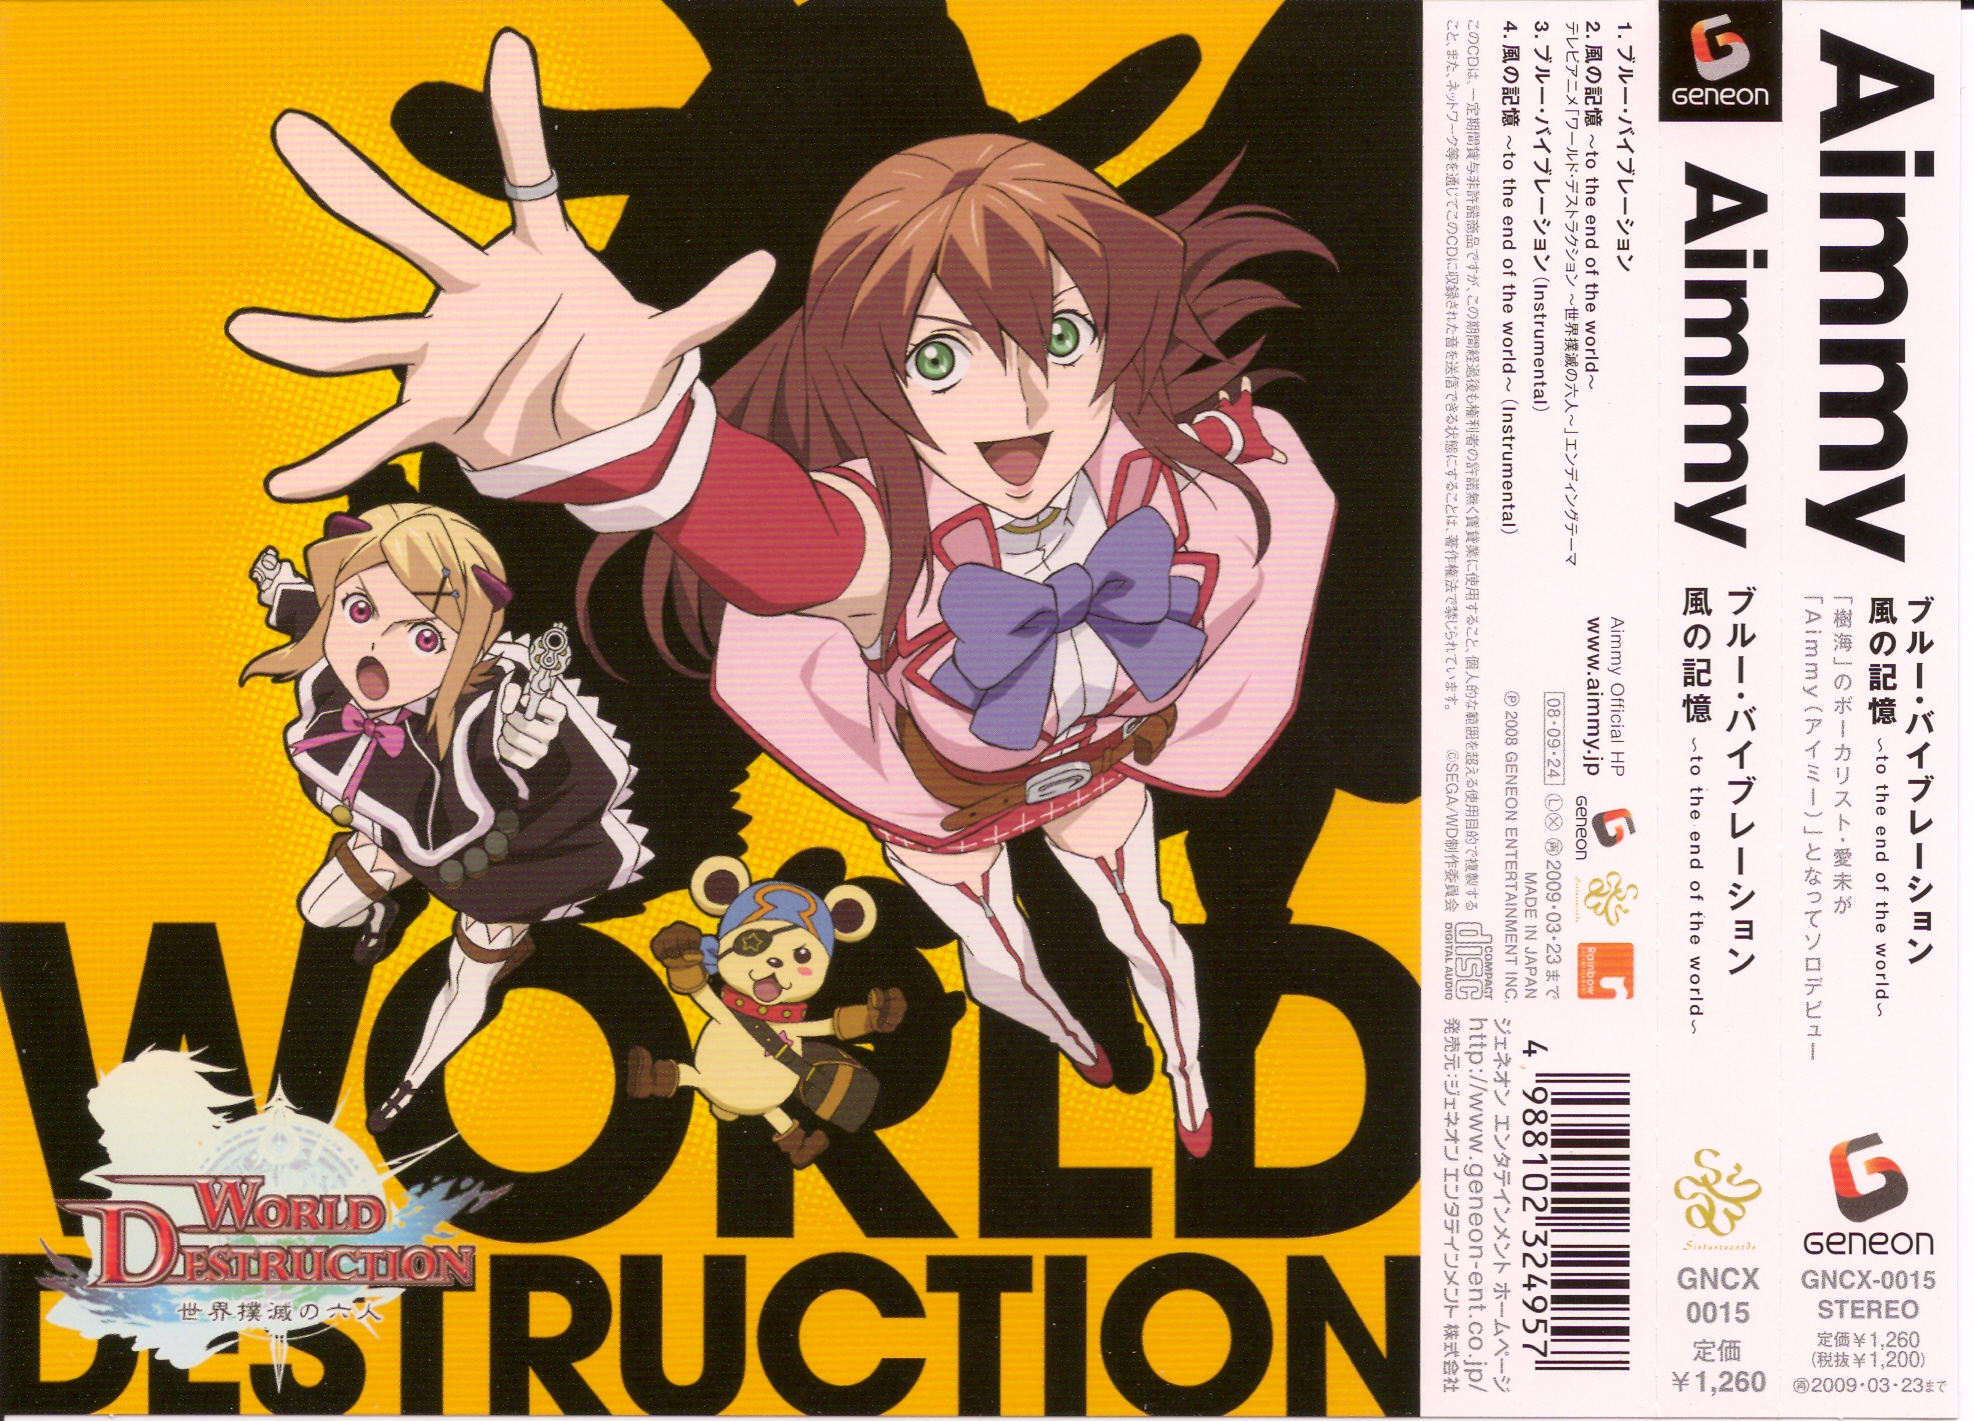 Nipponsei World Destruction ED Single - Kaze no Kioku to the end of the world Aimmy - Case Spine.jpg